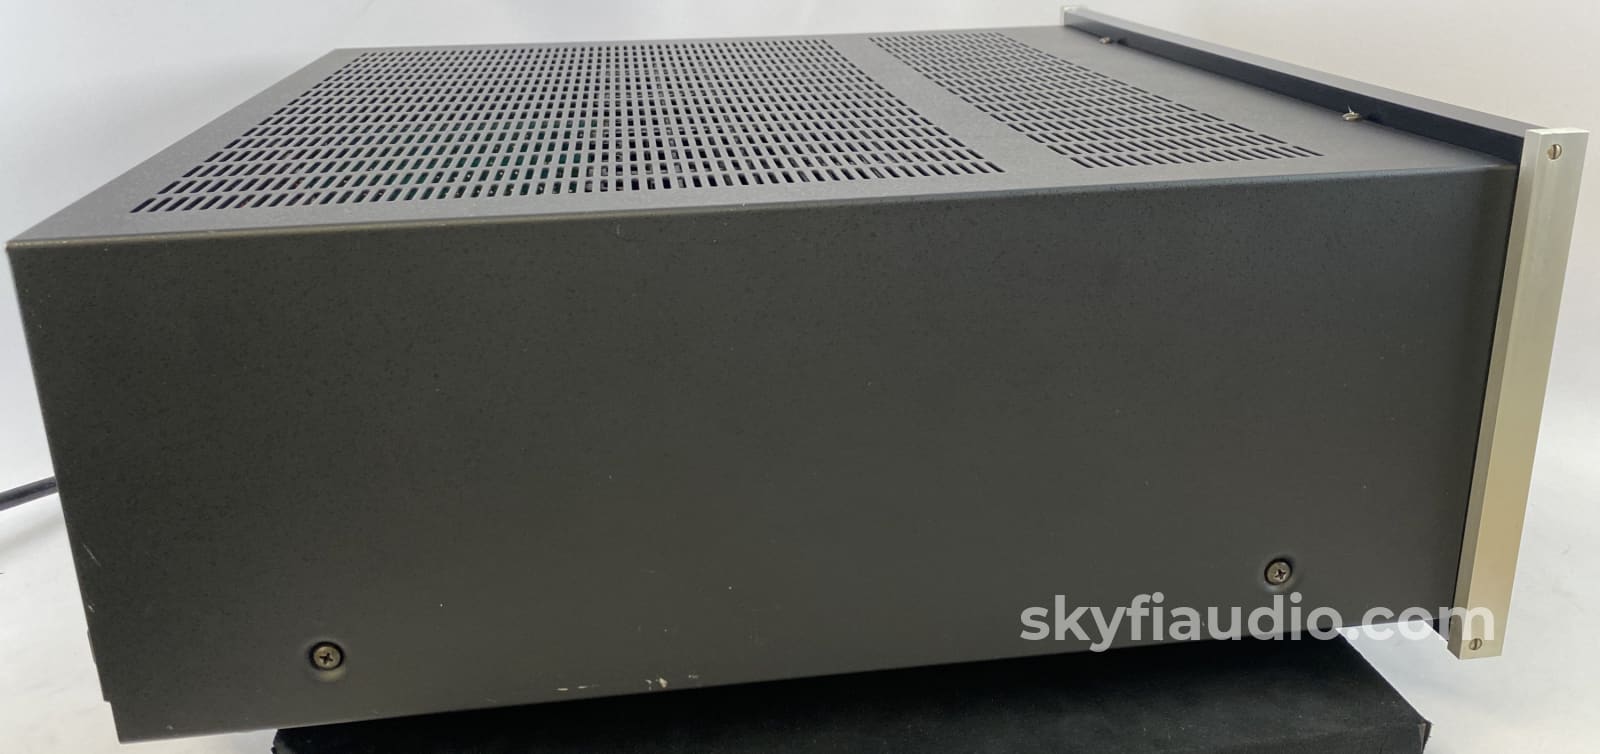 Mcintosh Mc7108 - 8 Channel Amplifier Configurable And Near Mint